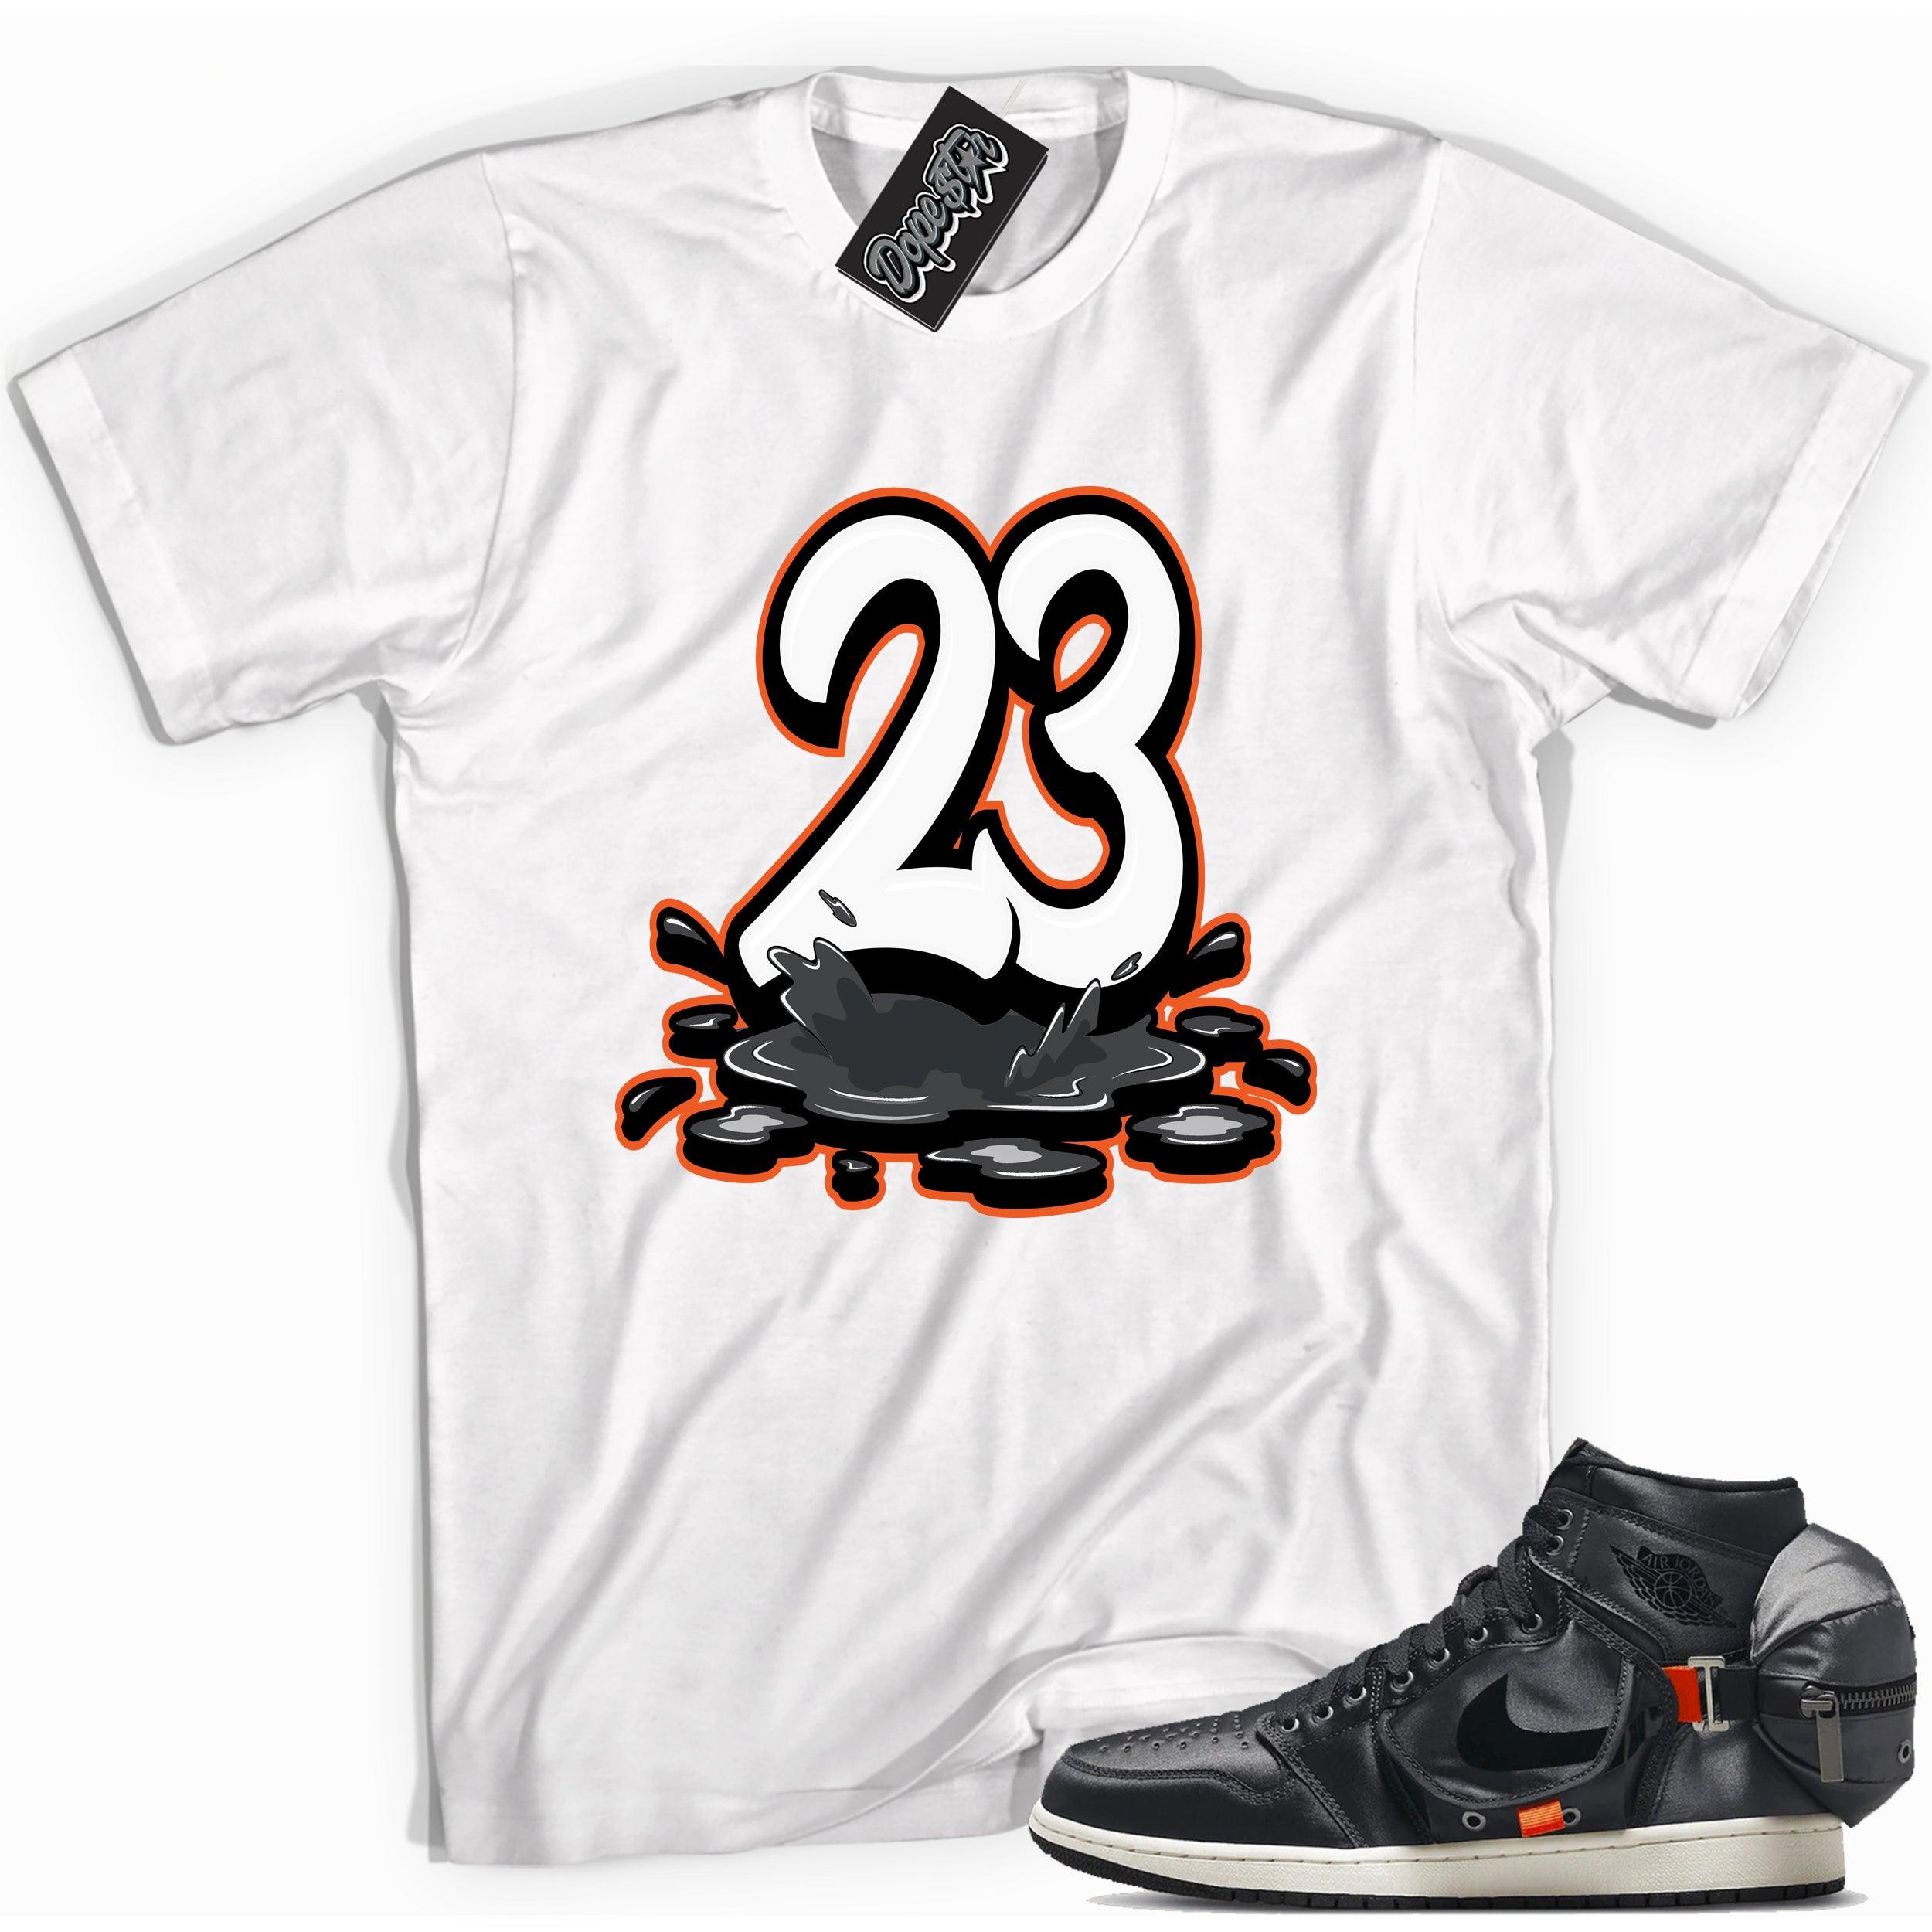 Number 23 Melting Shirt Air Jordan 1 OG Stash photo